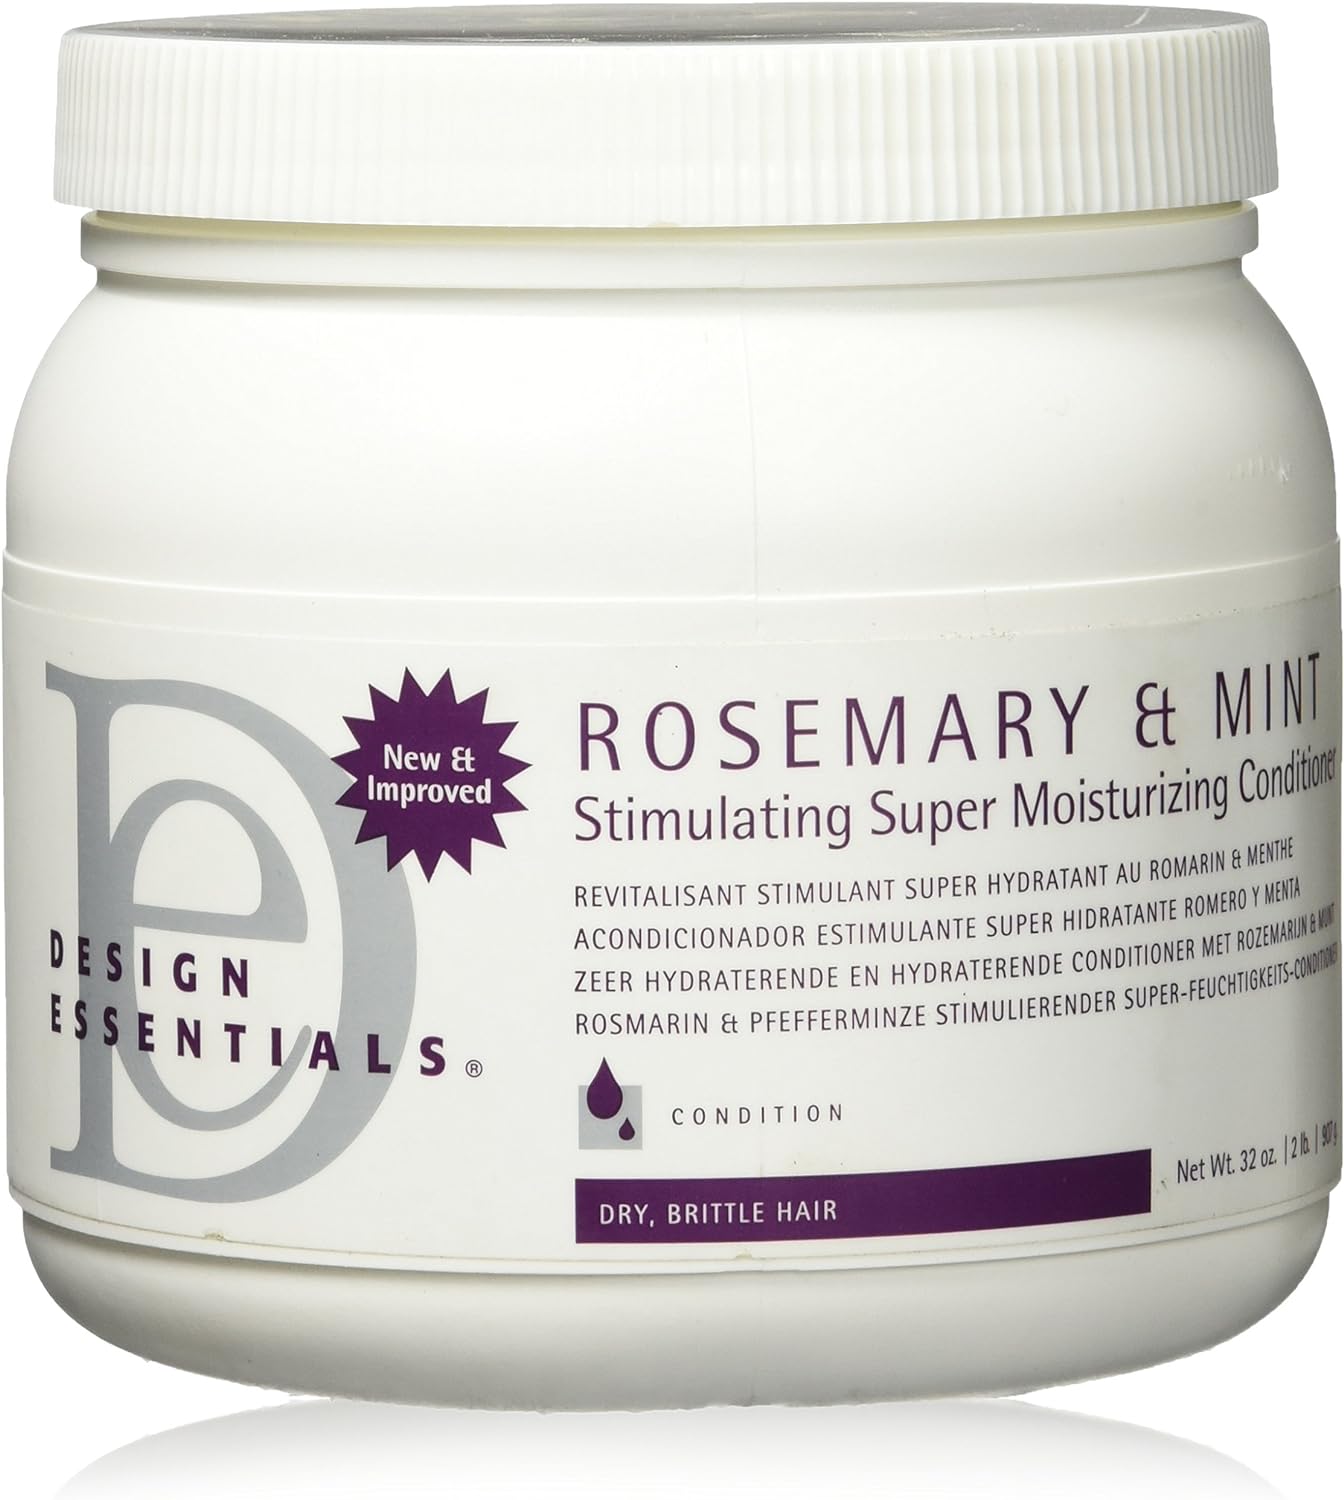 Design Essentials Rosemary & Mint Stimulating Super Moisturizing Conditioner